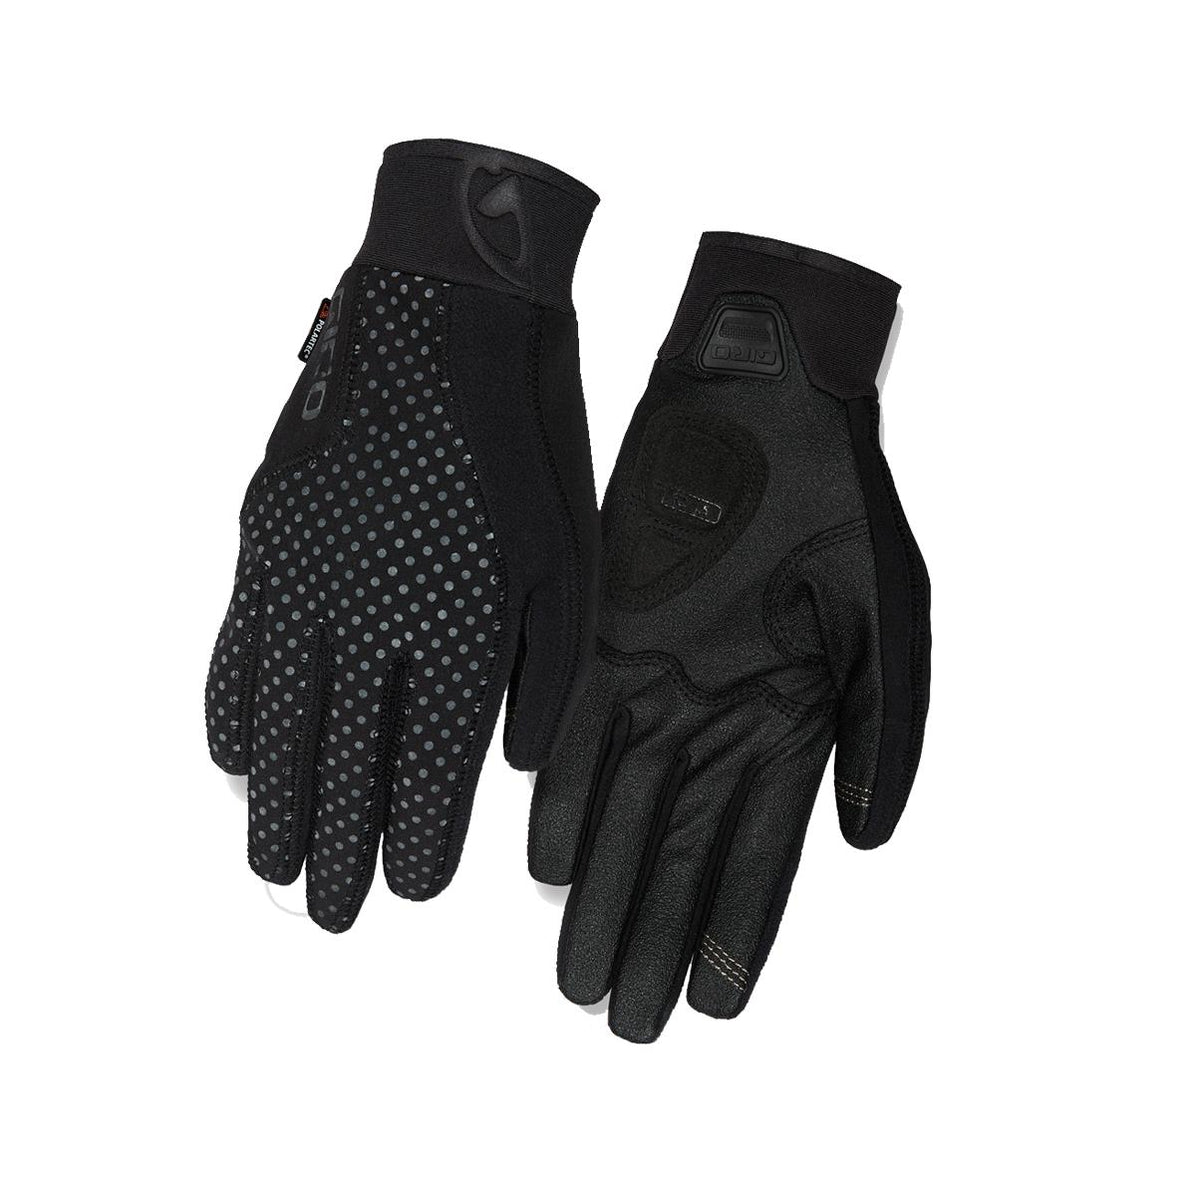 Giro Women's Inferna Water Resistant Windbloc Cycling Gloves